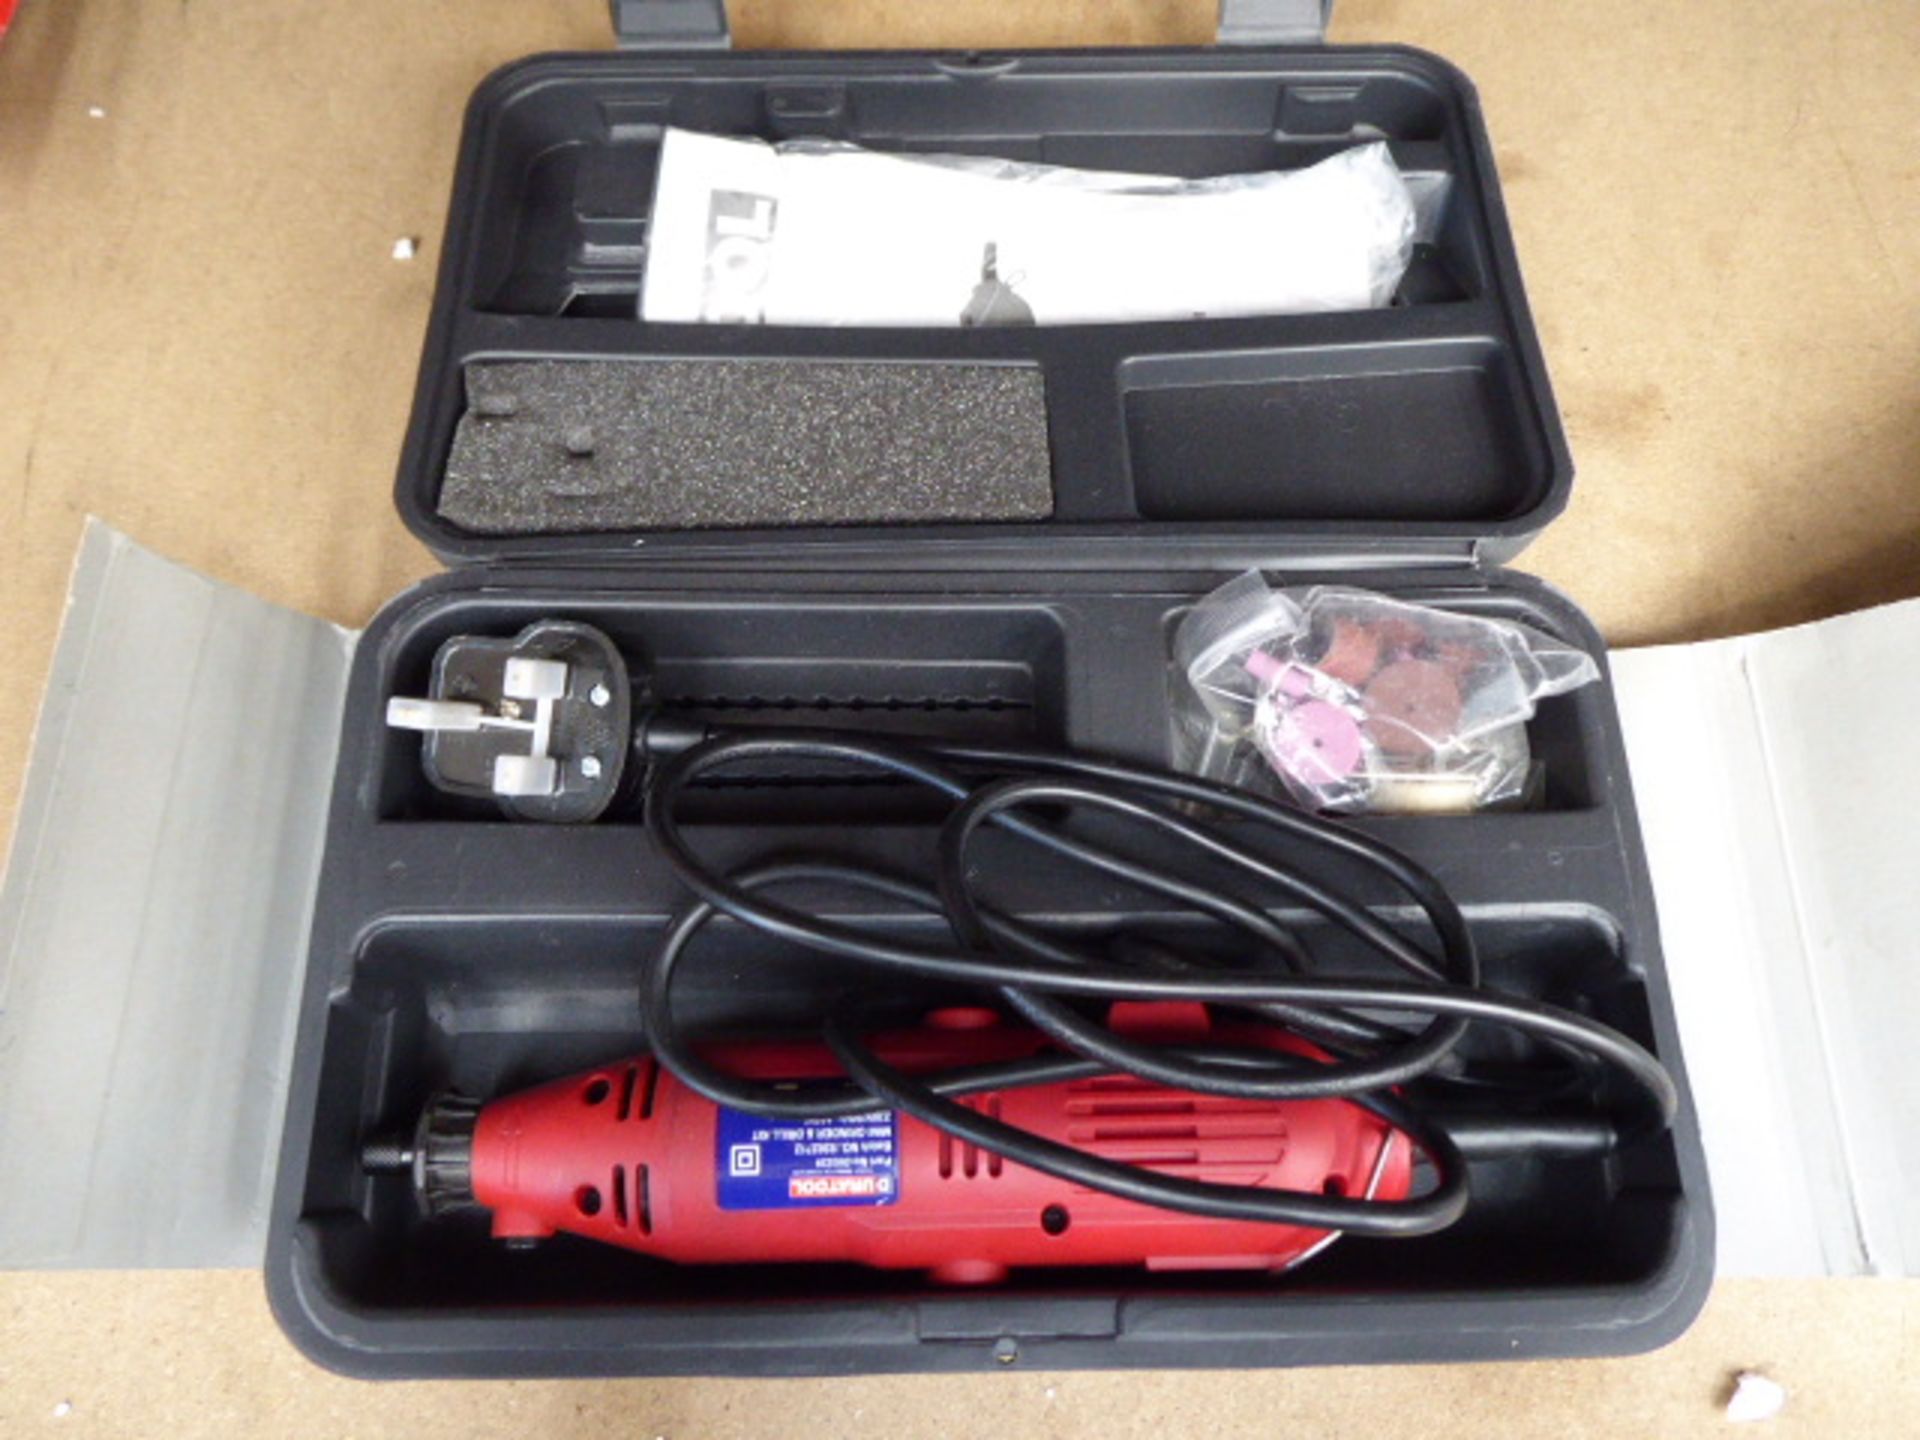 4388 - Duratool mini grinder and drill kit